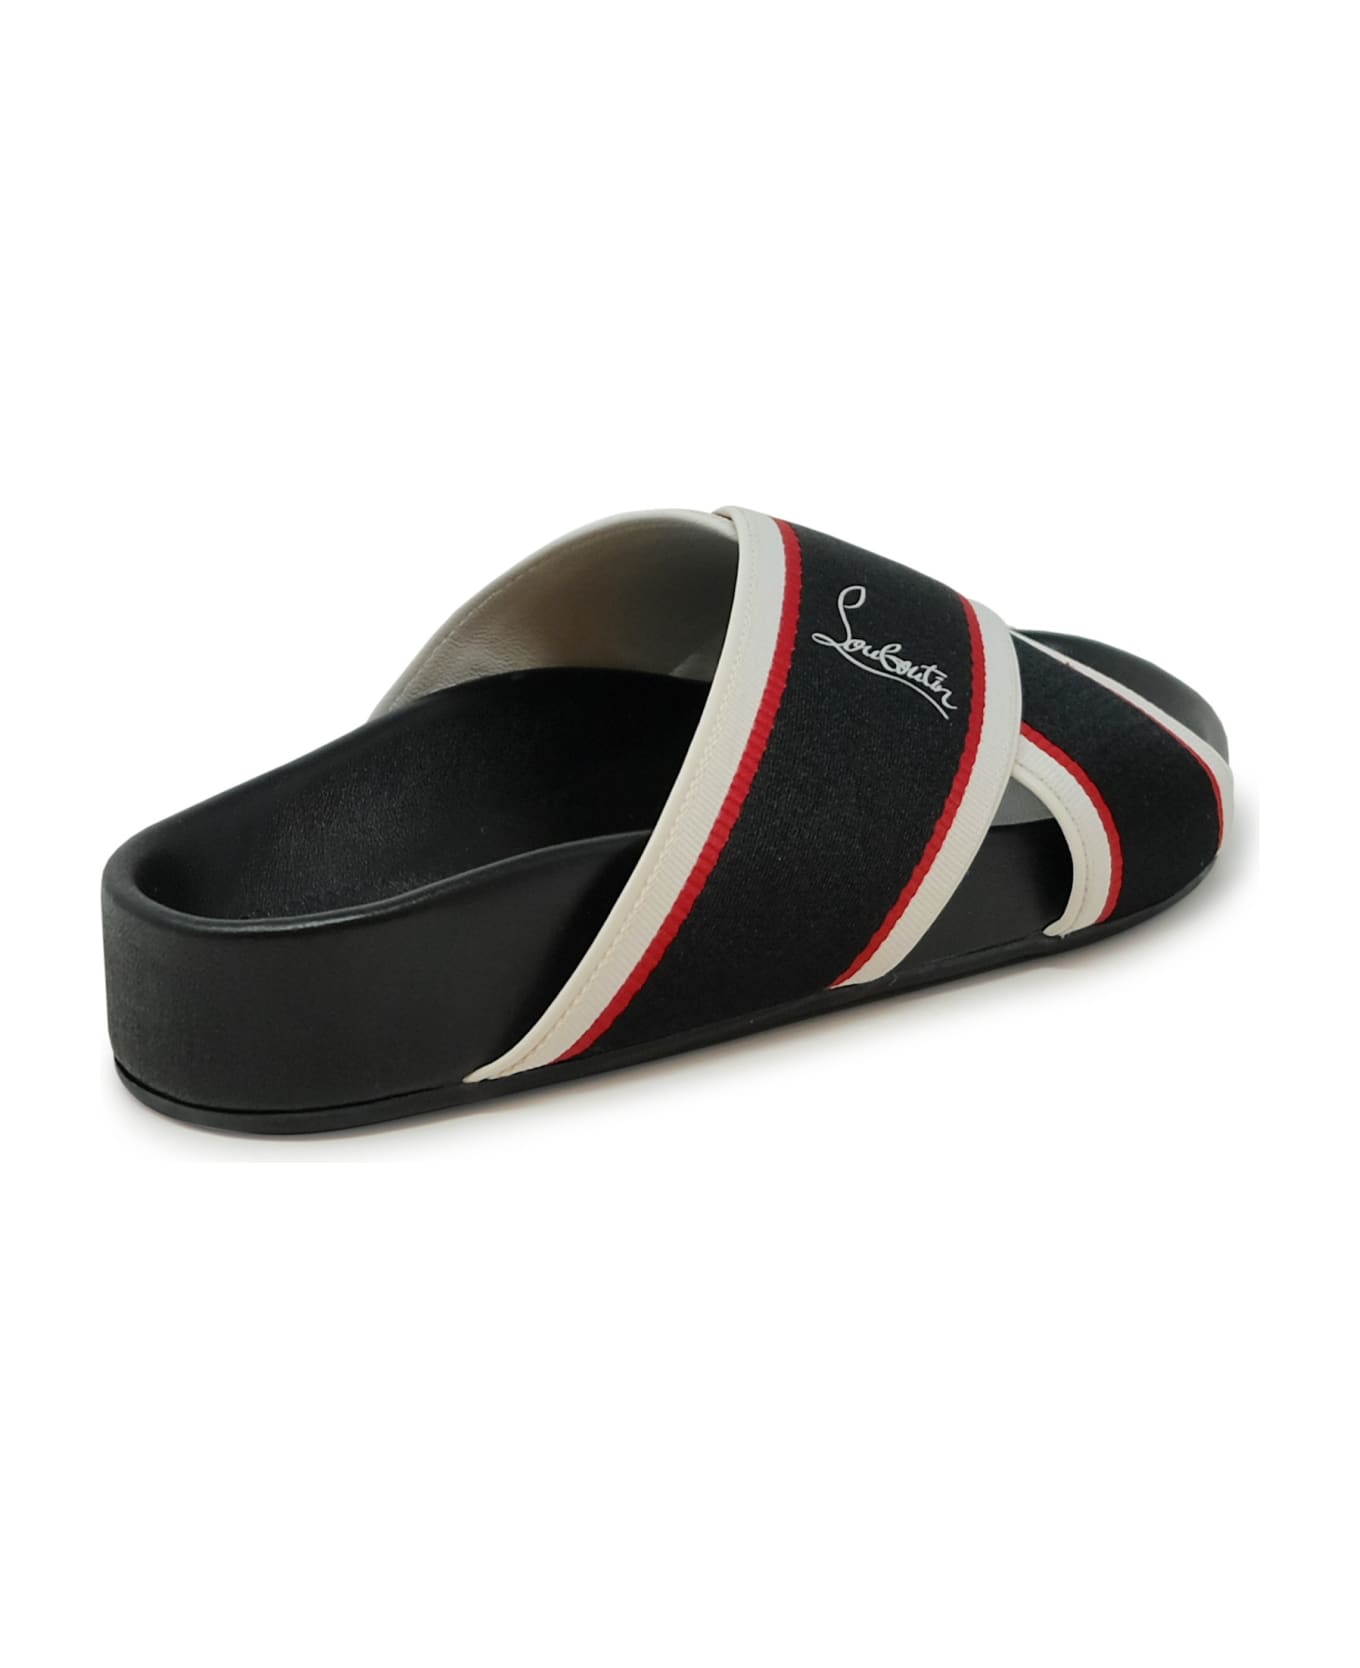 Christian Louboutin Black Leather Hot Cross Flat Sandals - MULTICOLOR